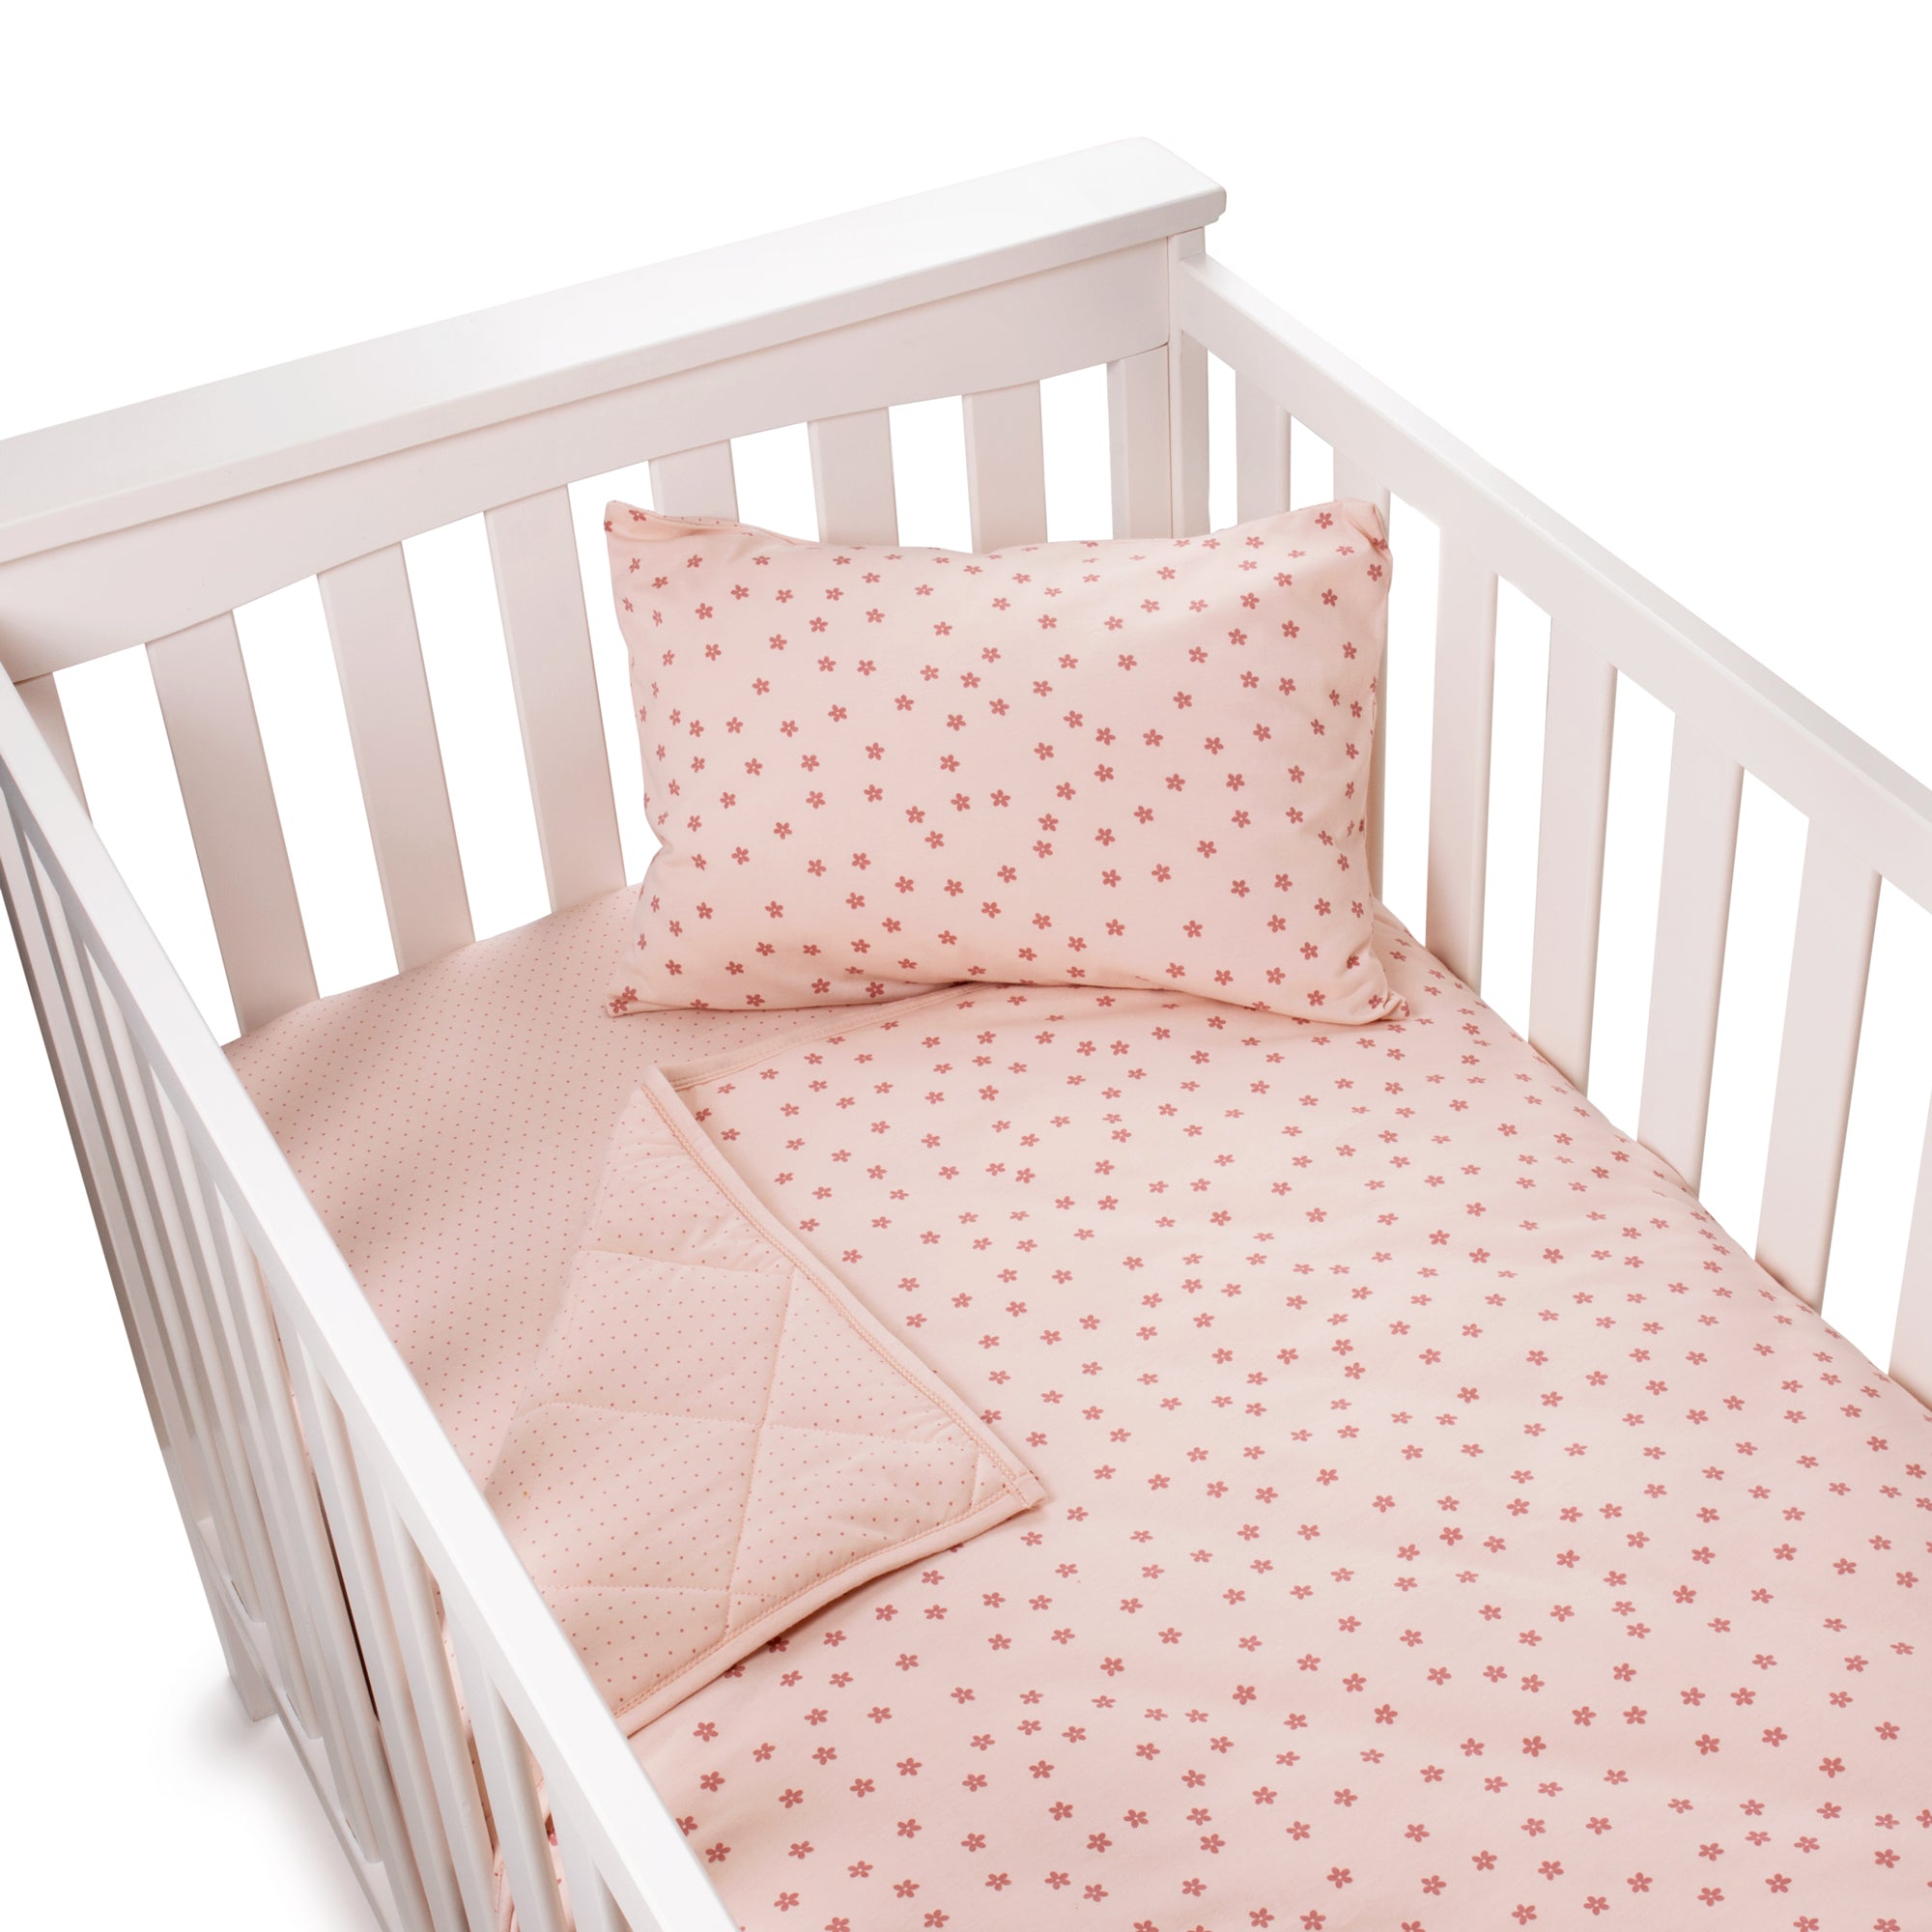 Four Piece Baby Crib Set